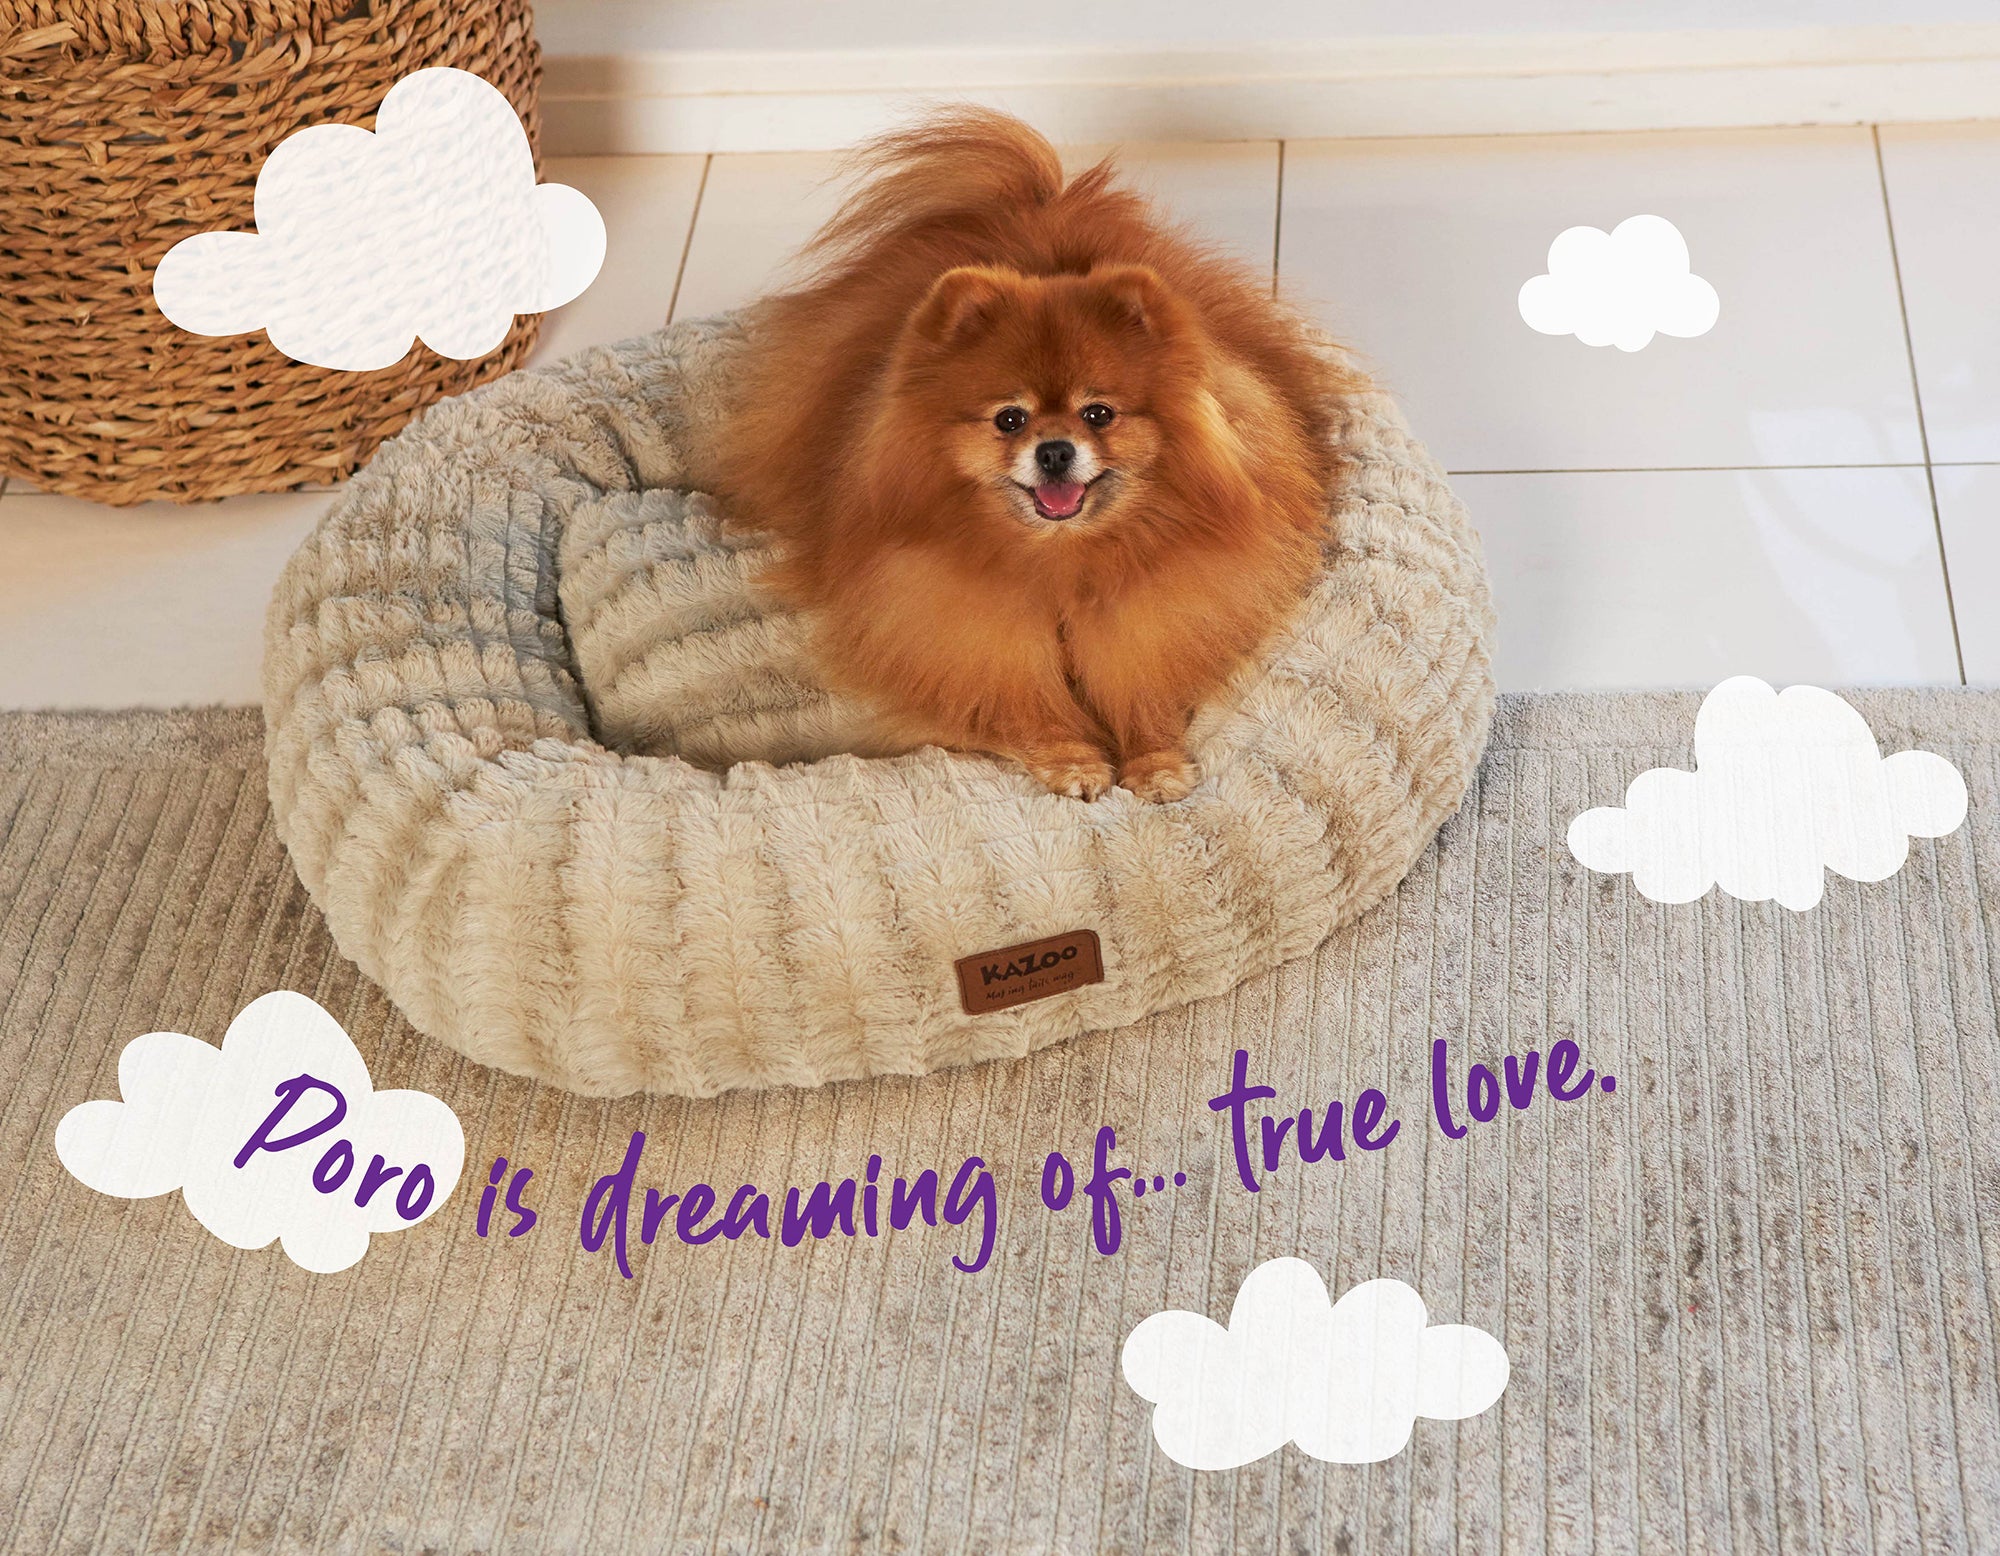 Little fluffy pomeranian on fluffy bed, 'Poro is dreaming of true love'